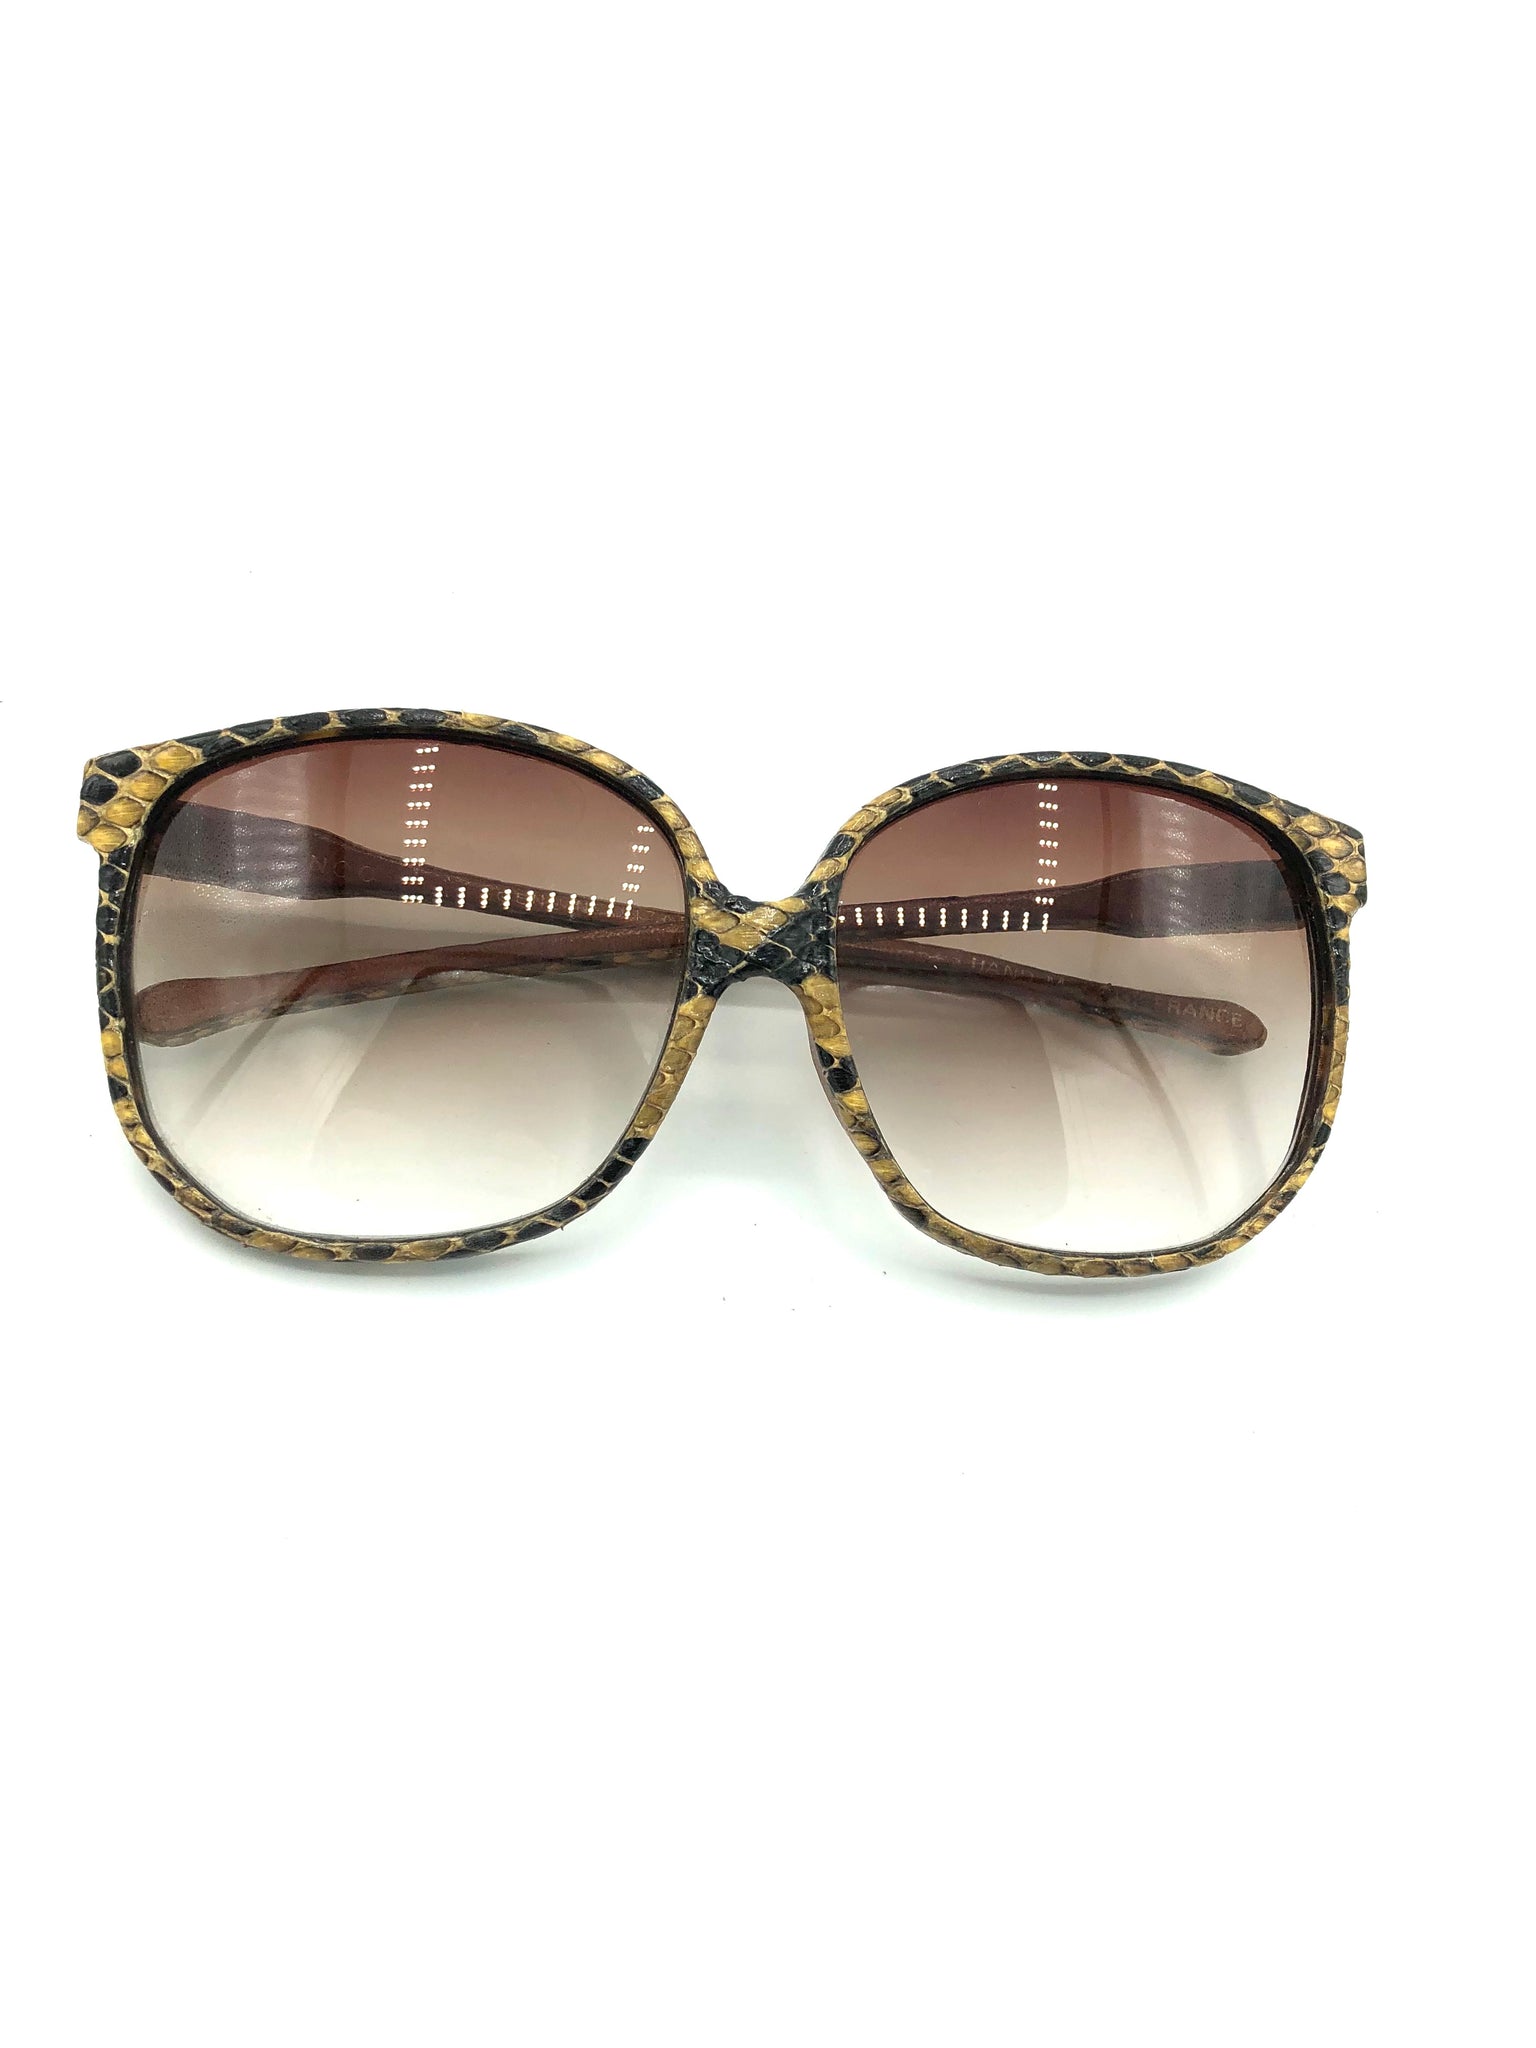 Emmanuelle Khanh 80s Snakeskin Sunglasses FRONT 2 of 5